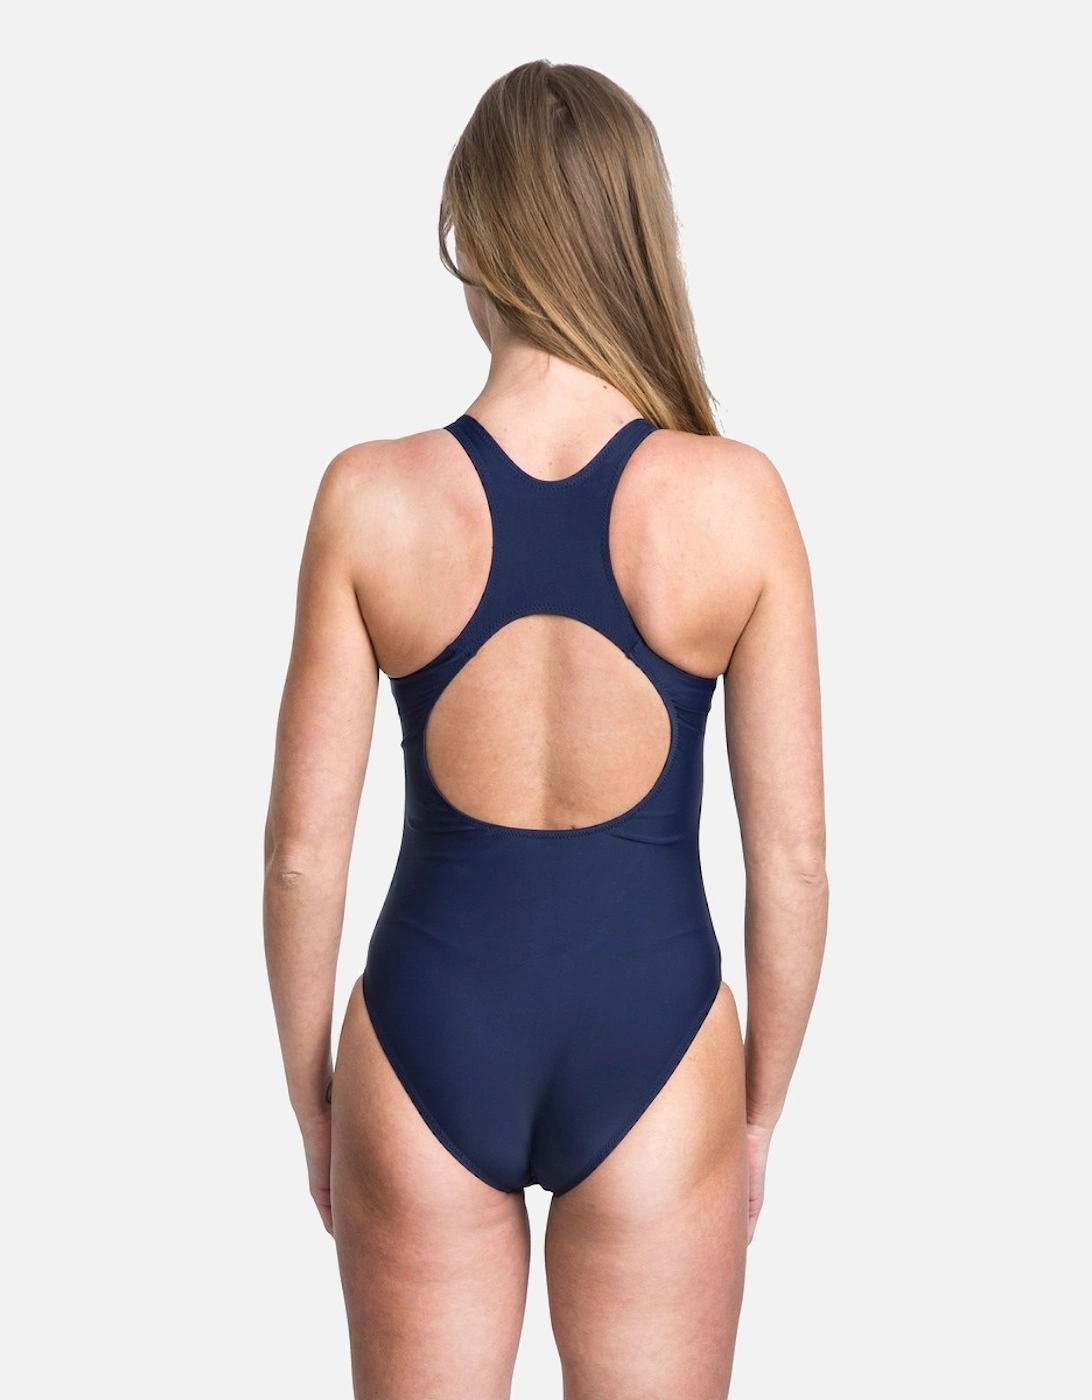 Womens/Ladies Adlington Swimsuit/Swimming Costume